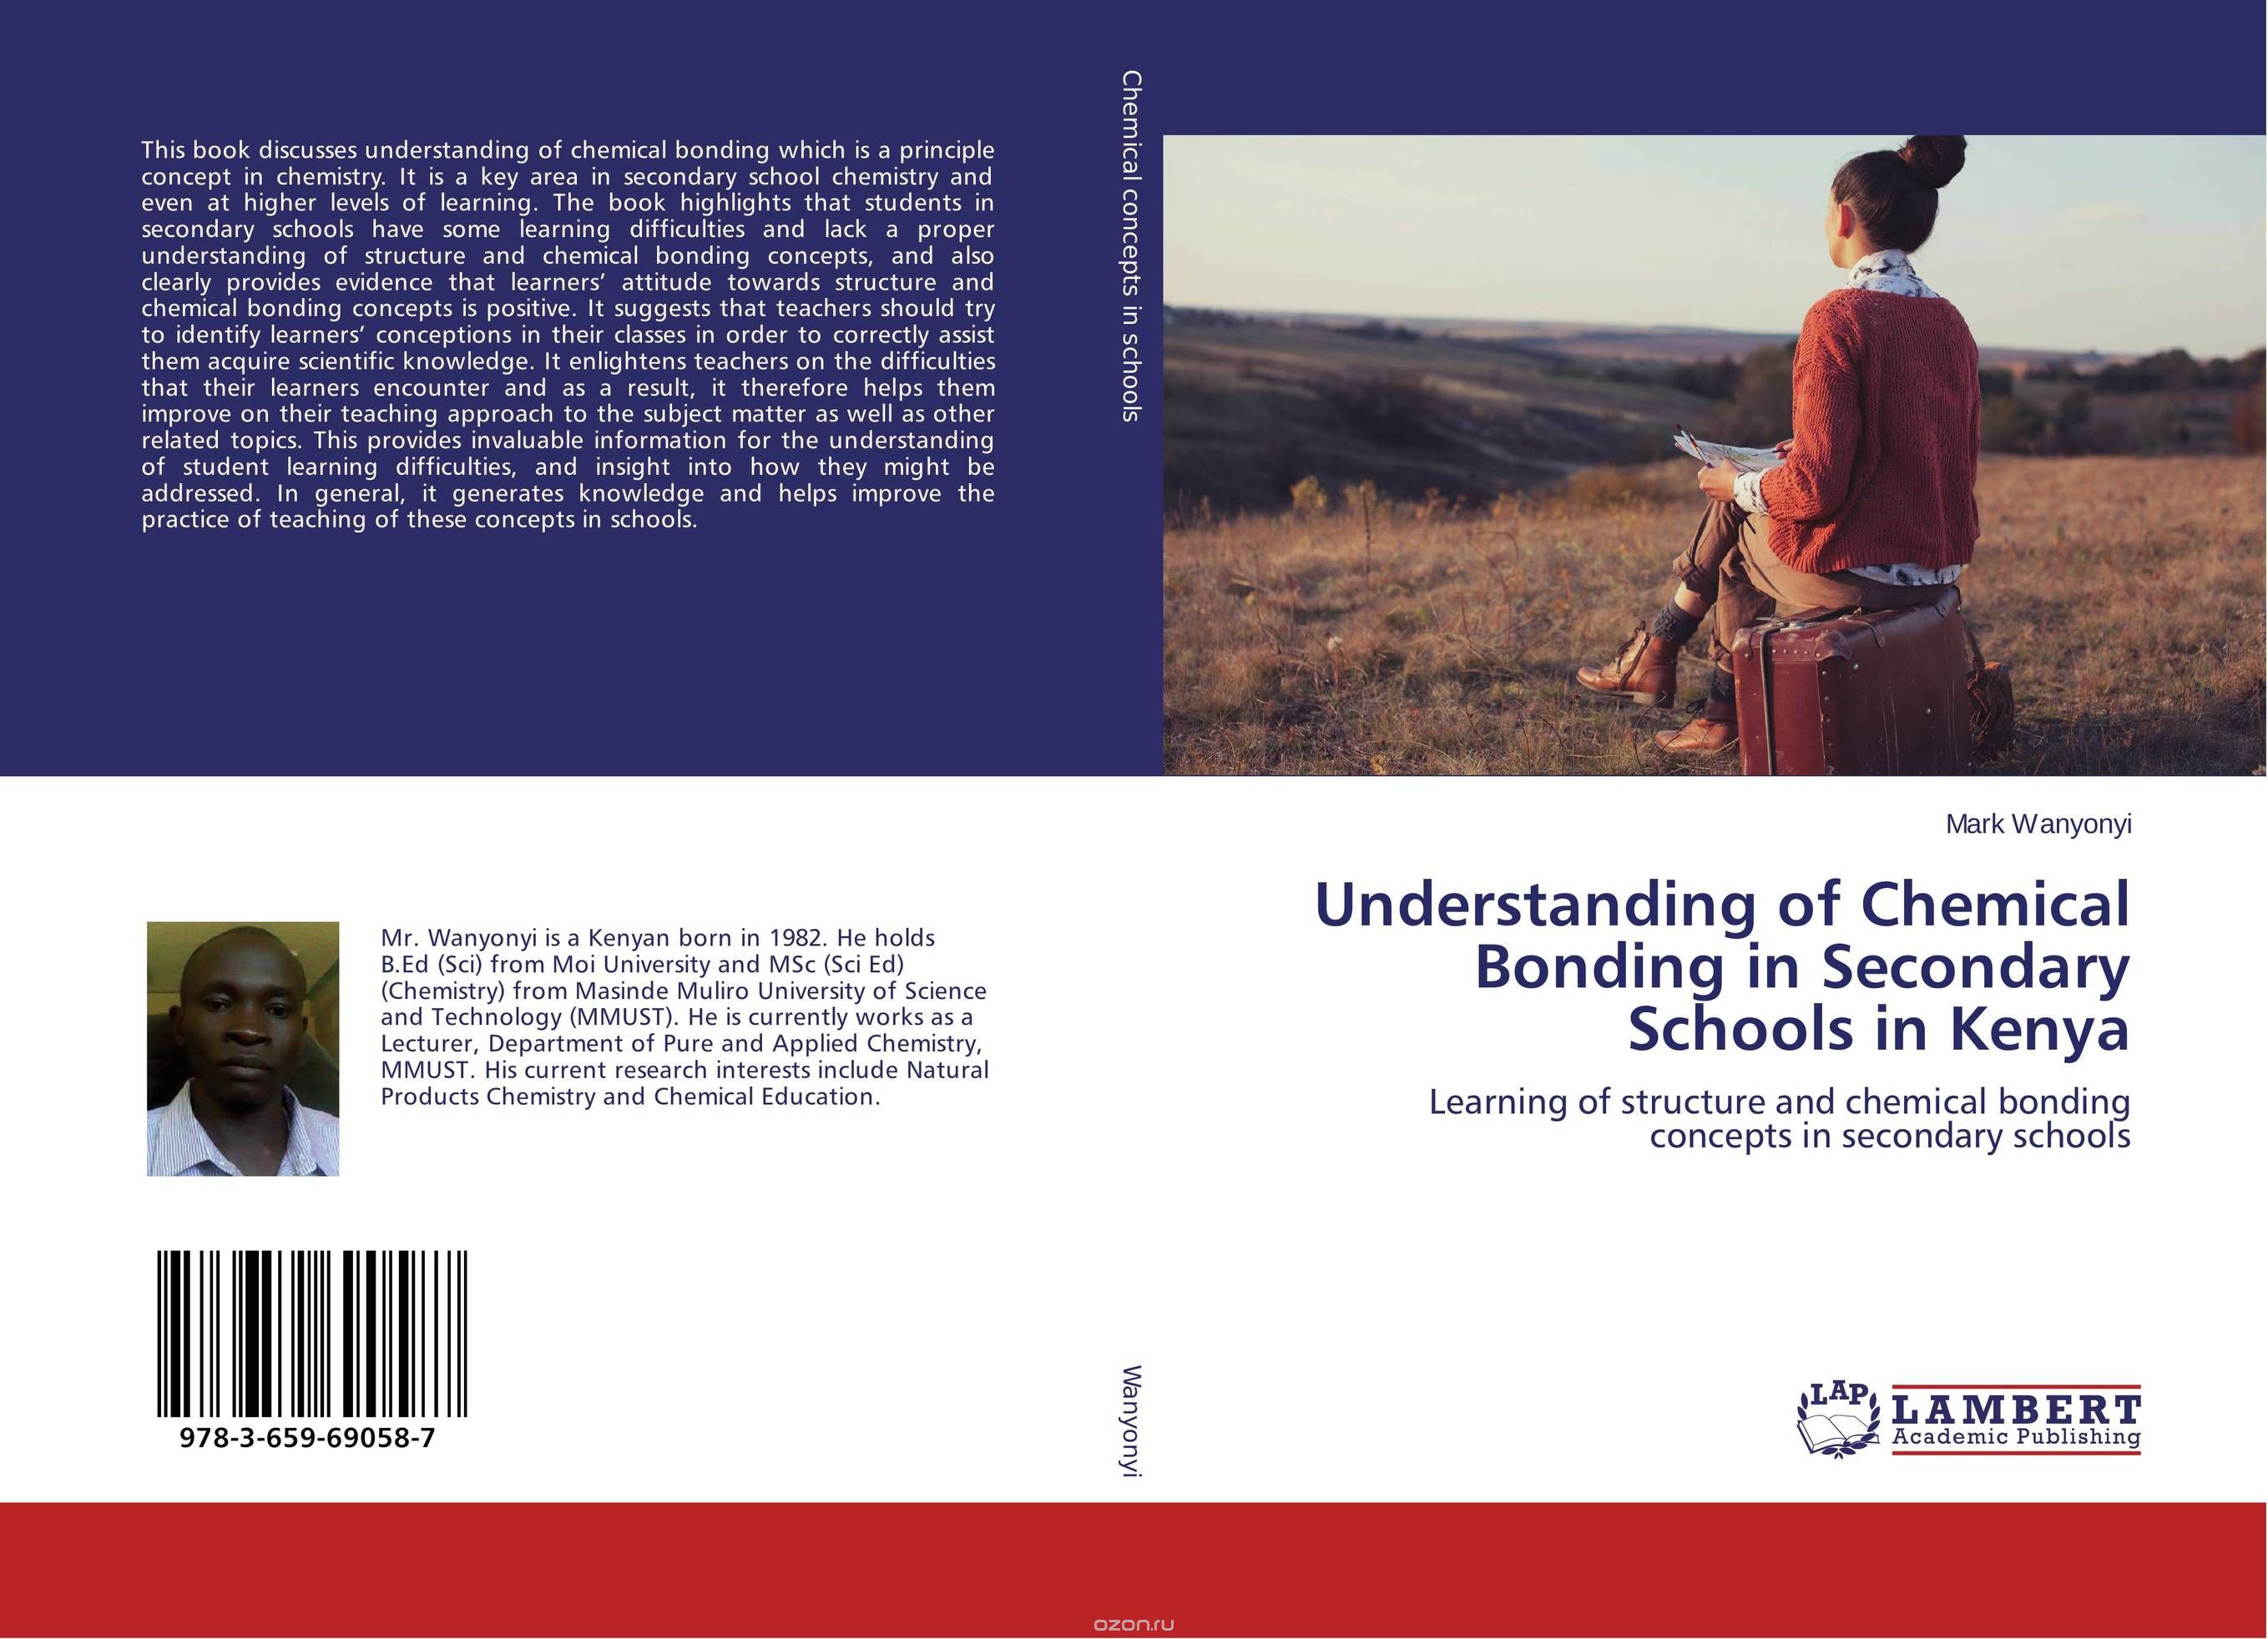 Скачать книгу "Understanding of Chemical Bonding in Secondary Schools in Kenya"